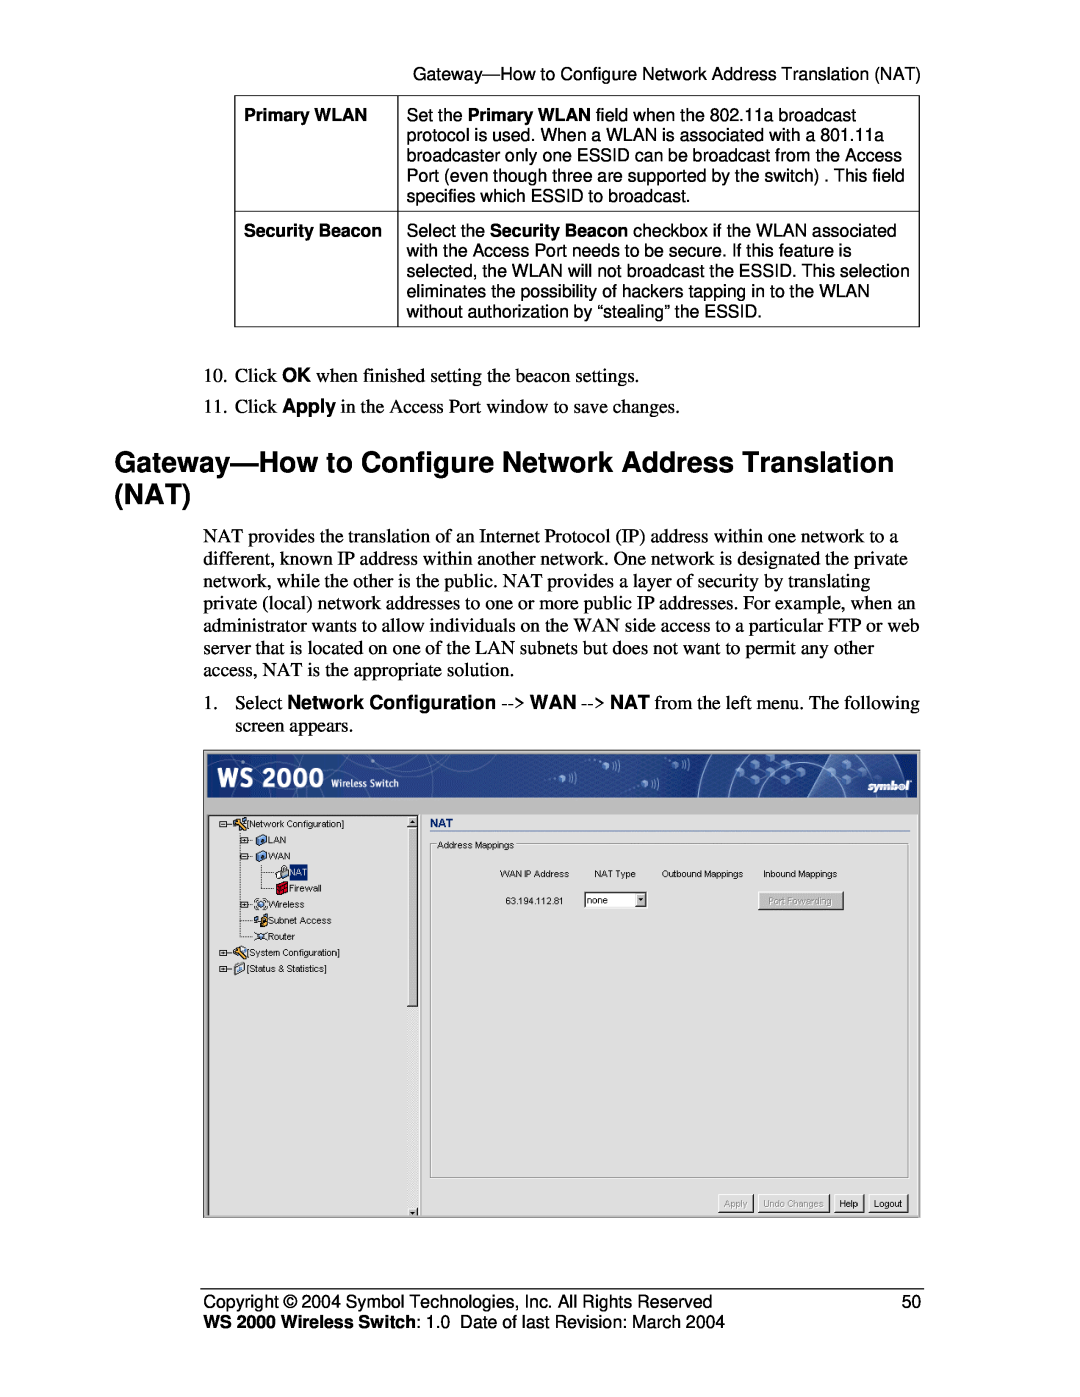 Symbol Technologies WS 2000 manual Gateway-How to Configure Network Address Translation NAT 